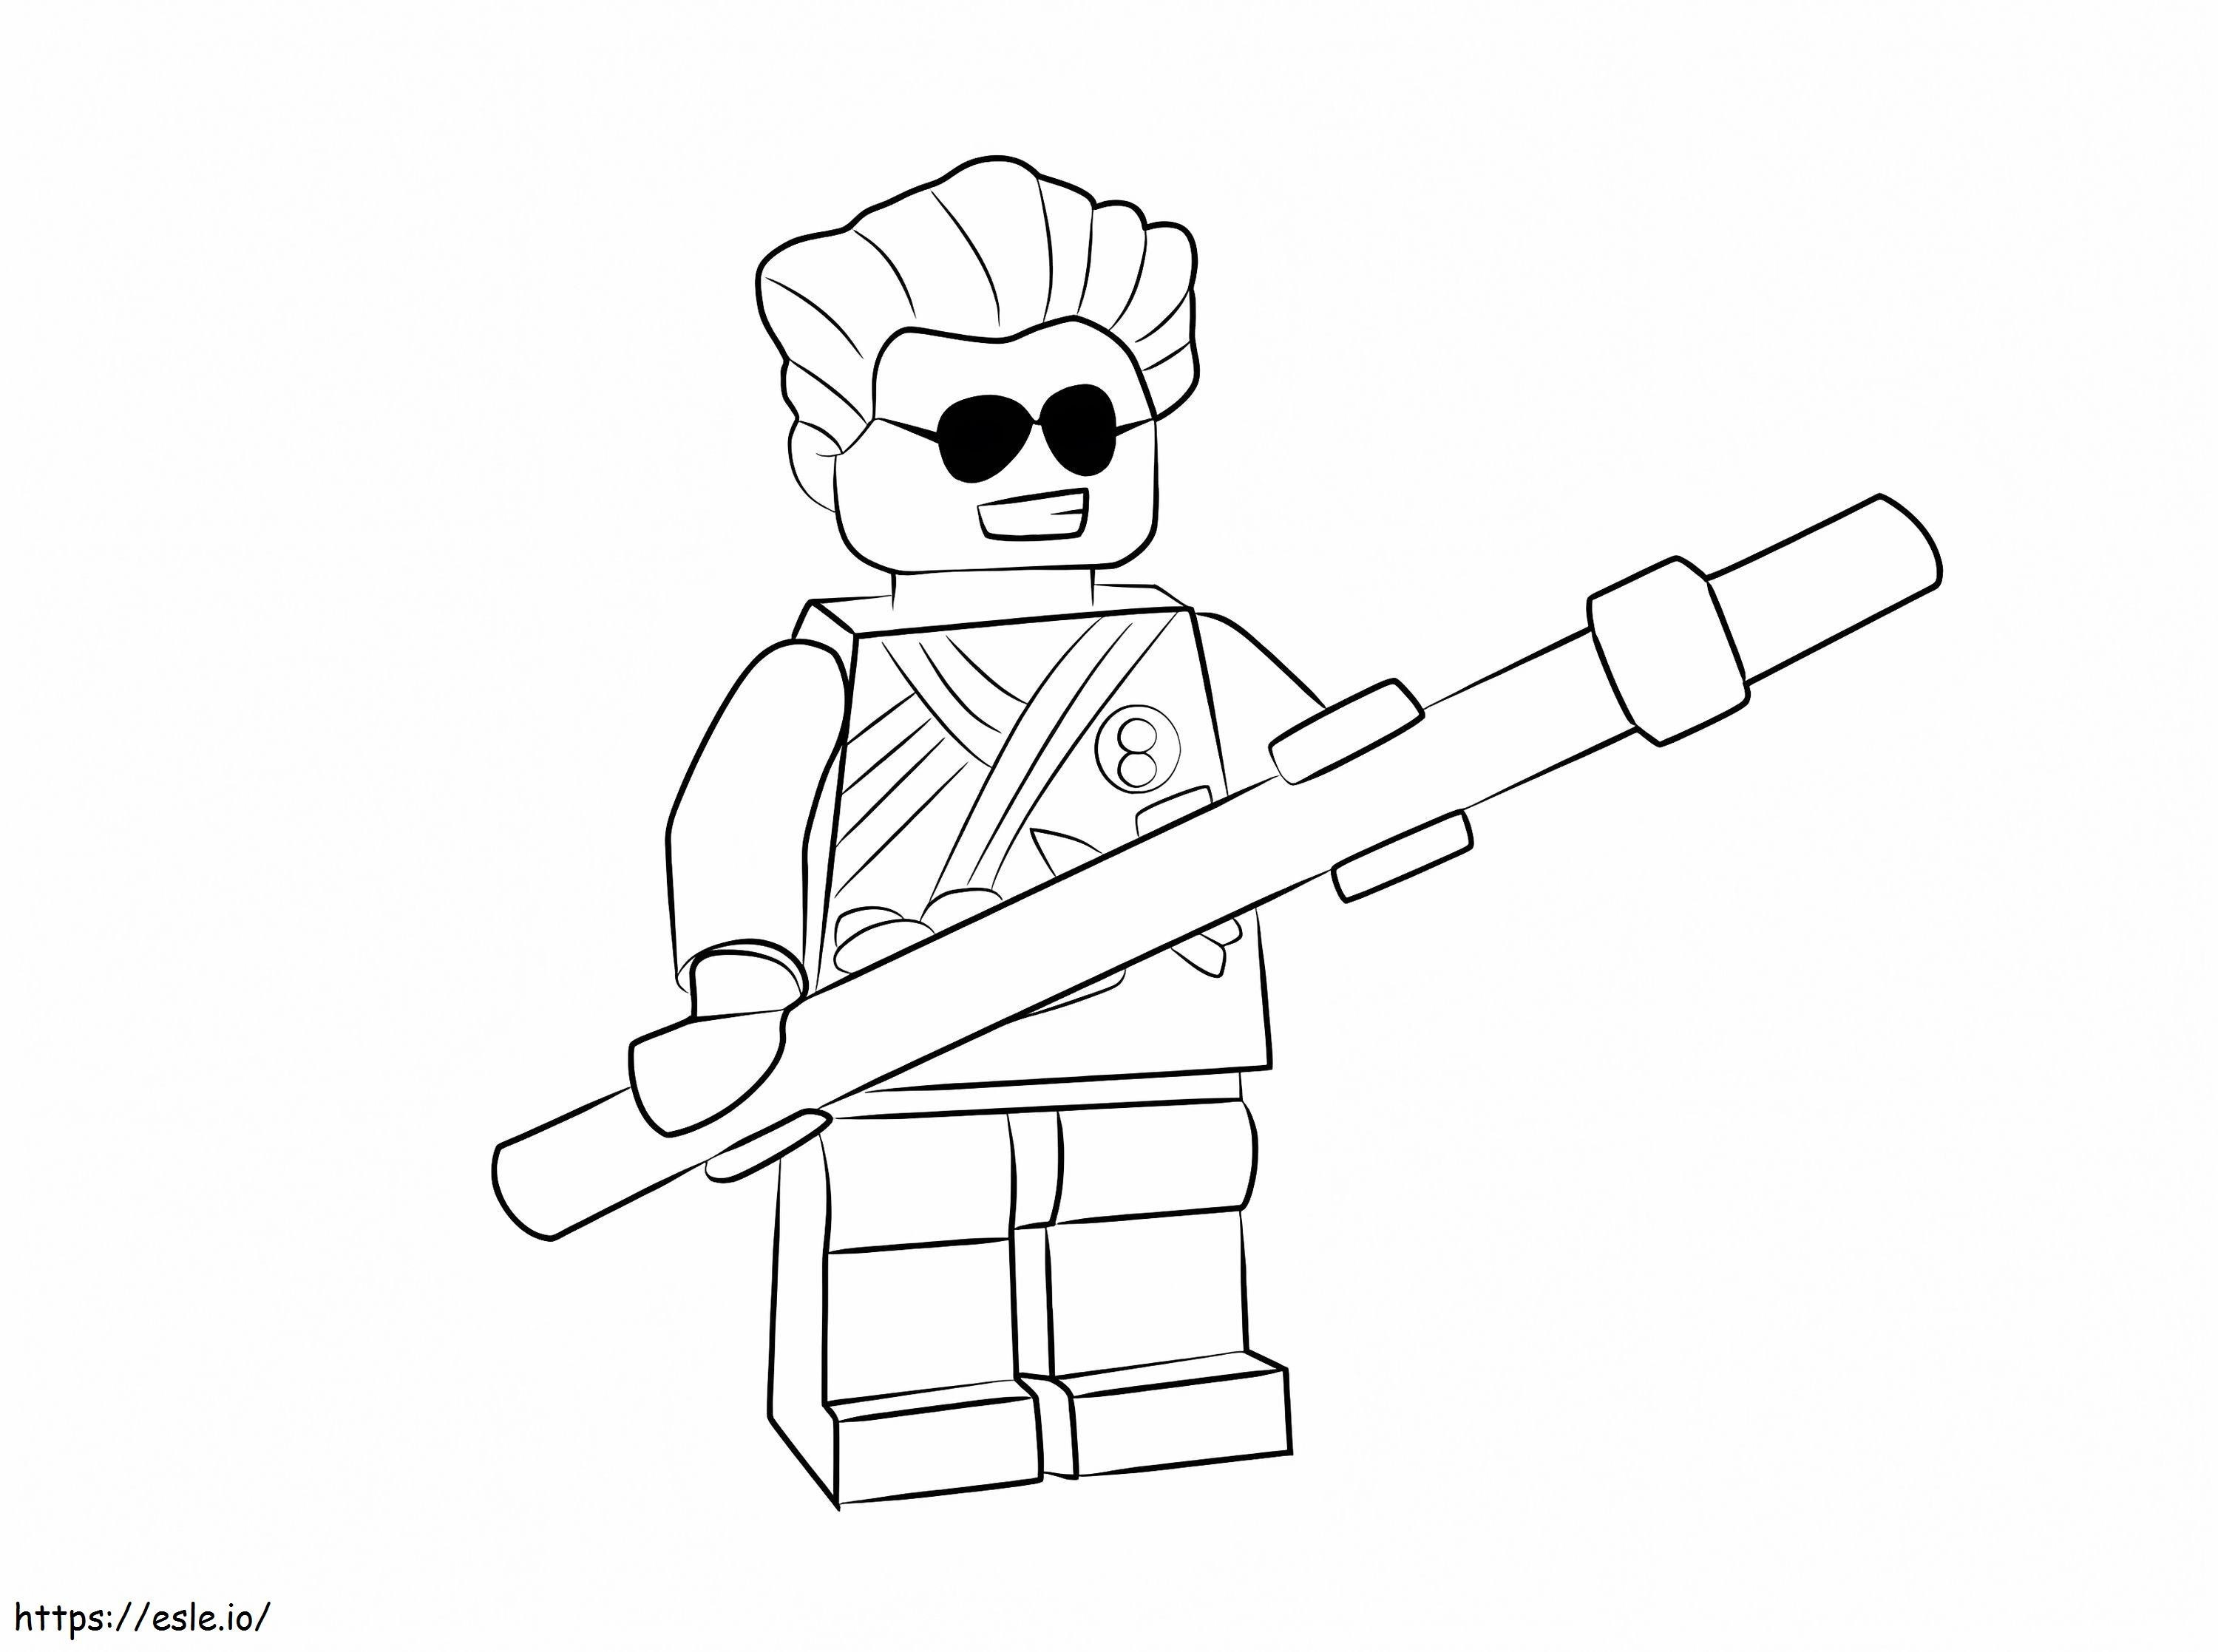 Griffin Lego Ninjago coloring page